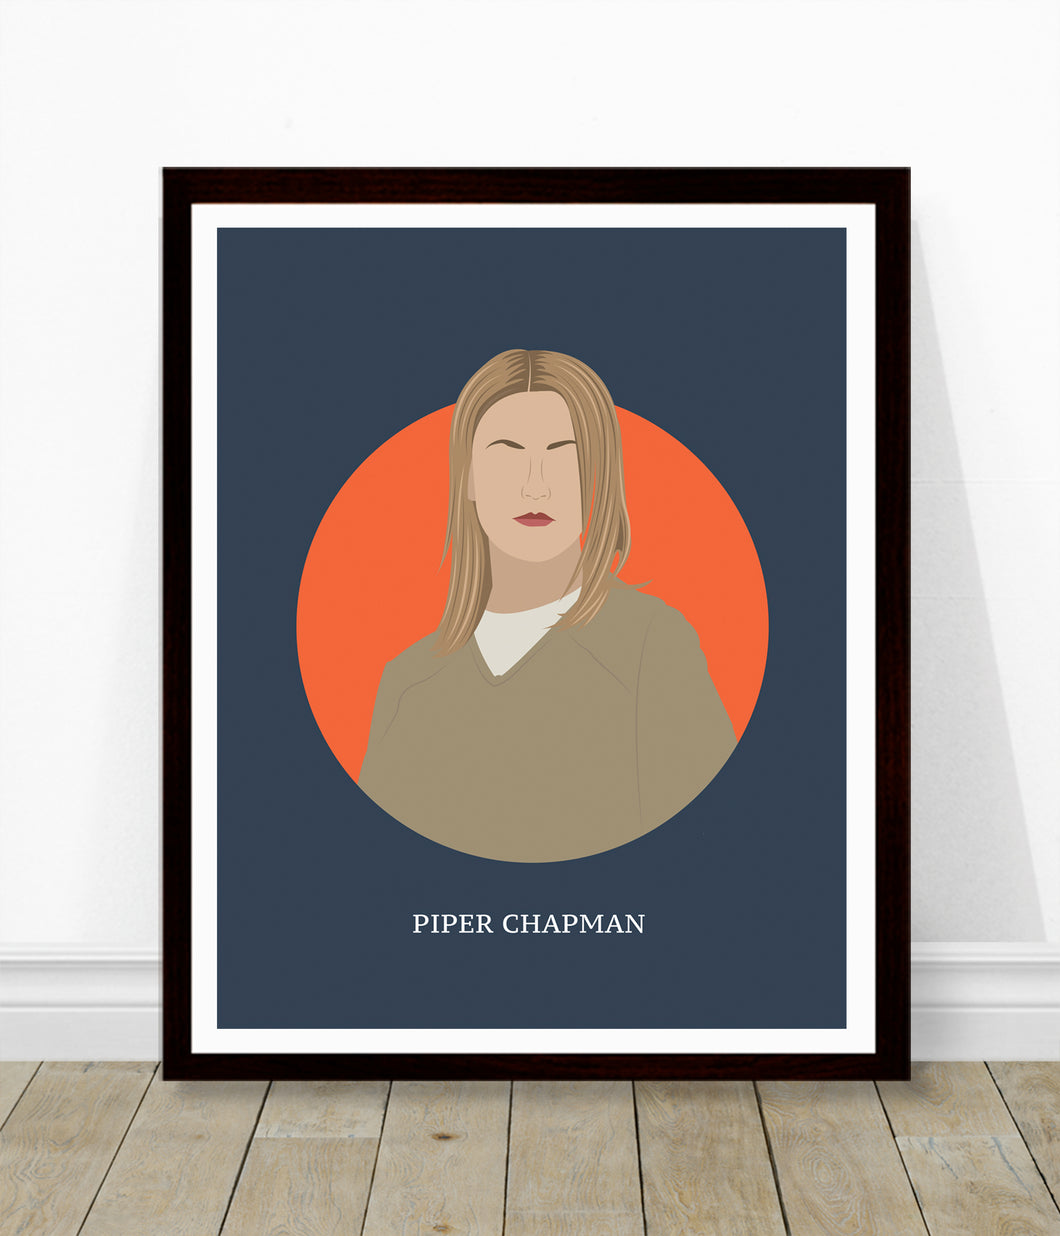 Piper Chapman